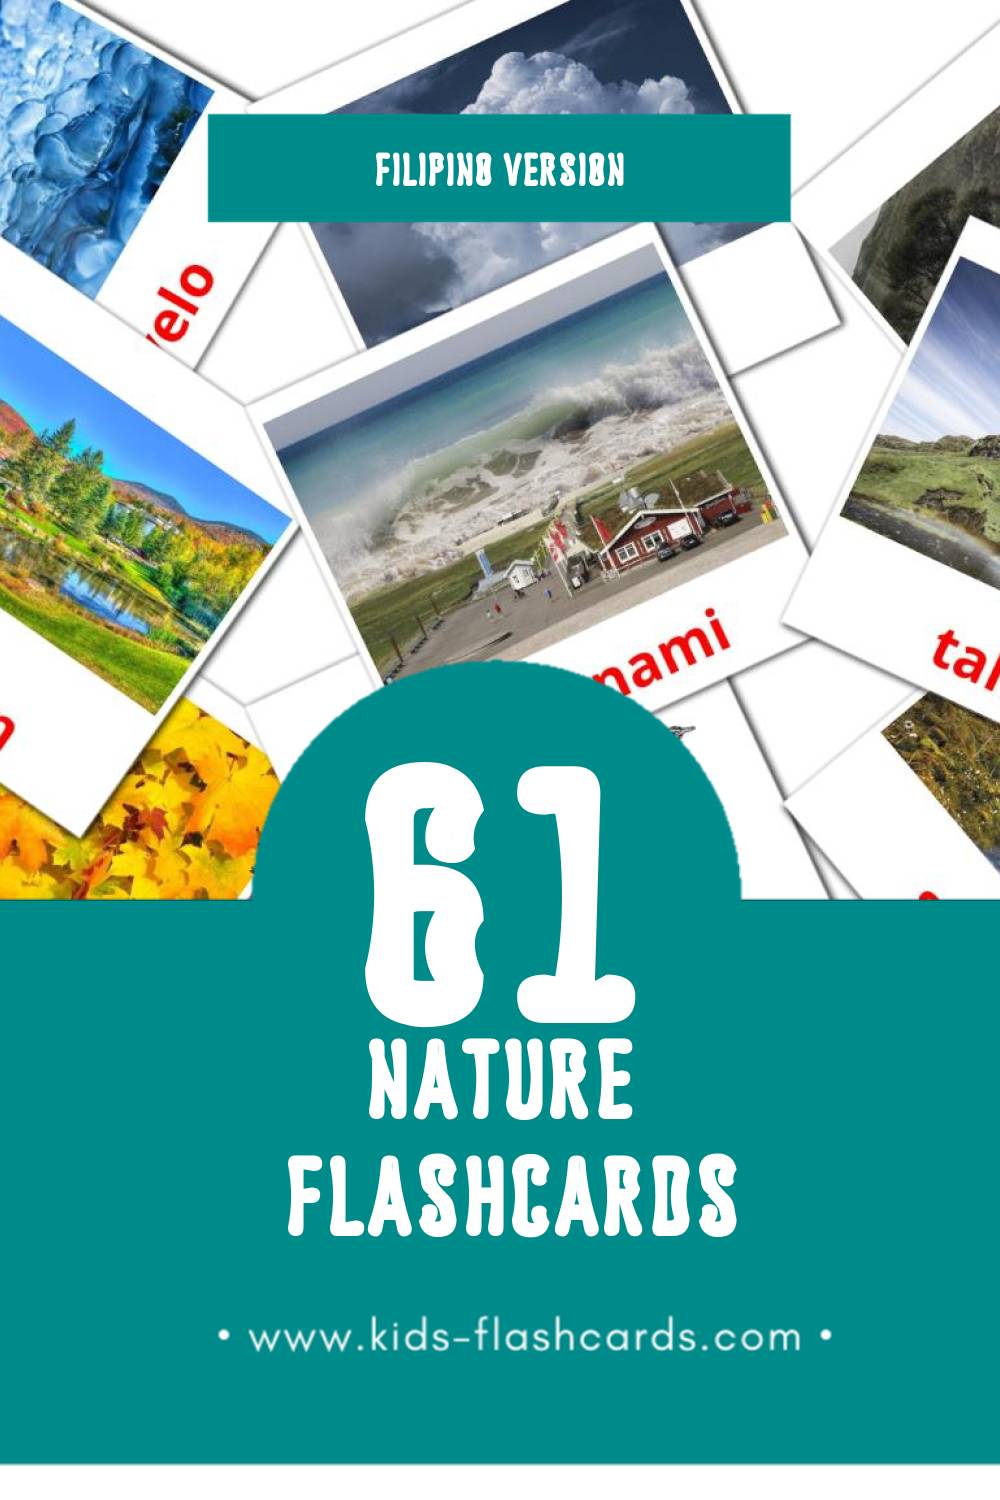 Visual Kalikasan Flashcards for Toddlers (61 cards in Filipino)